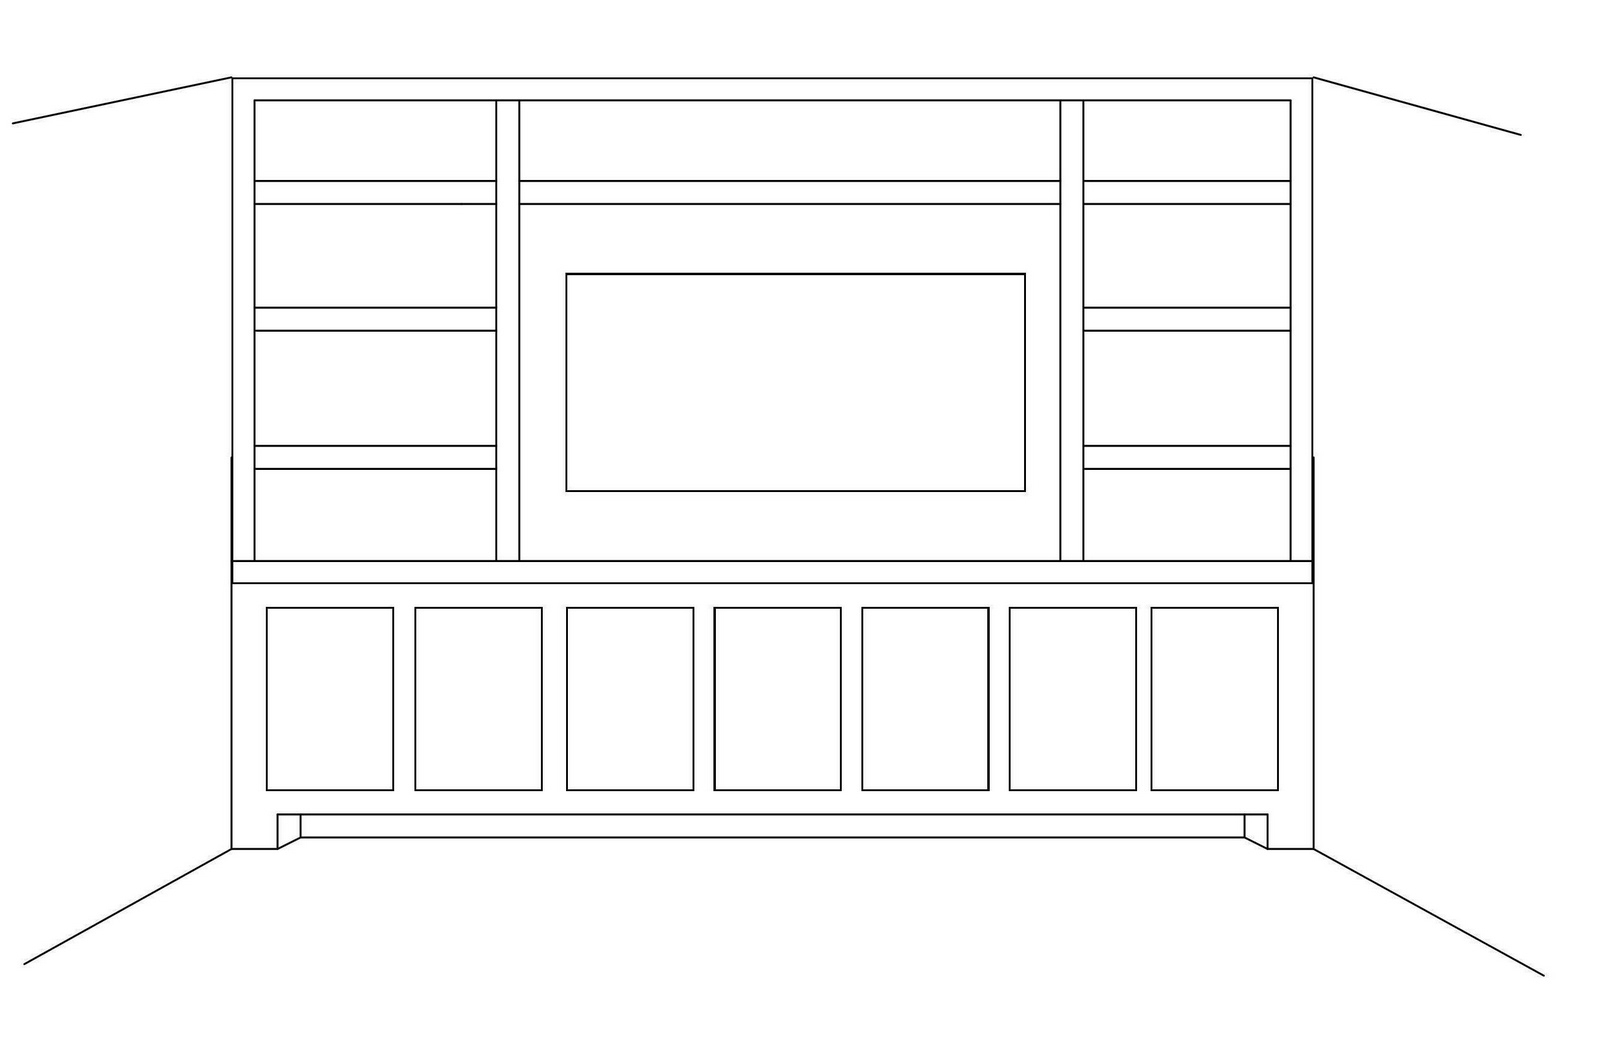 Woodworking build wall bookshelf plans PDF Free Download